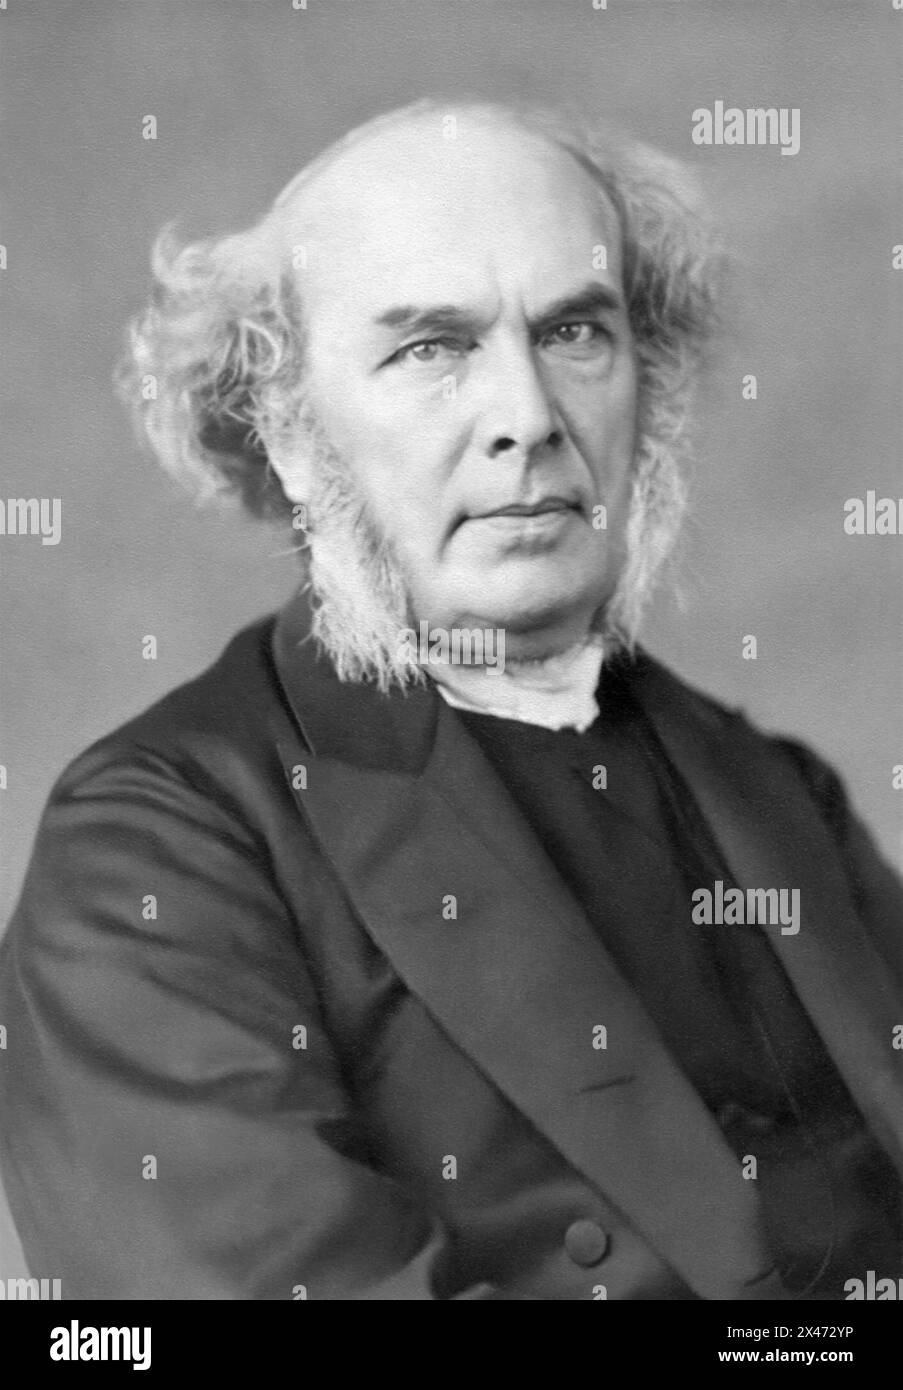 Horatius Bonar (1808-1889), 19th-century evangelical Scottish hymn writer, author, and churchman. Stock Photo